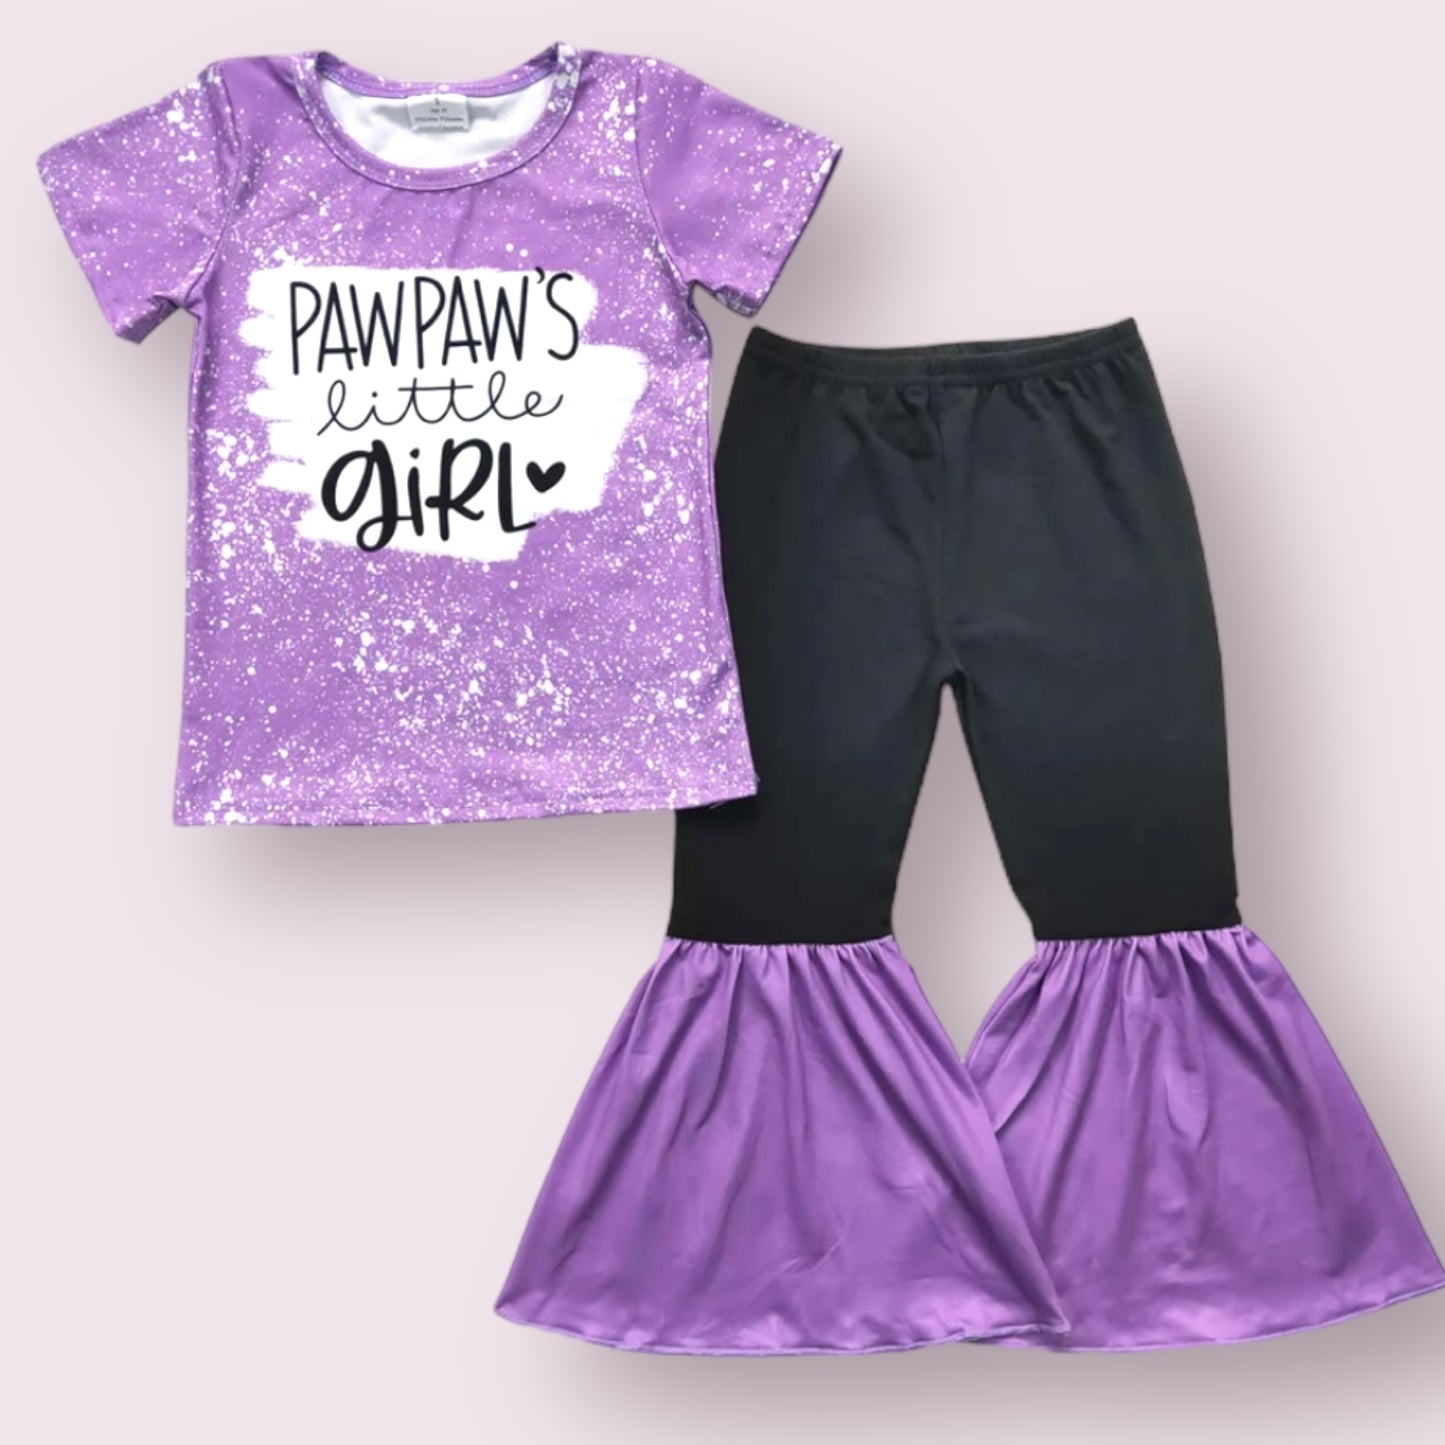 Pawpaw’s Little Girl Bell Pant set